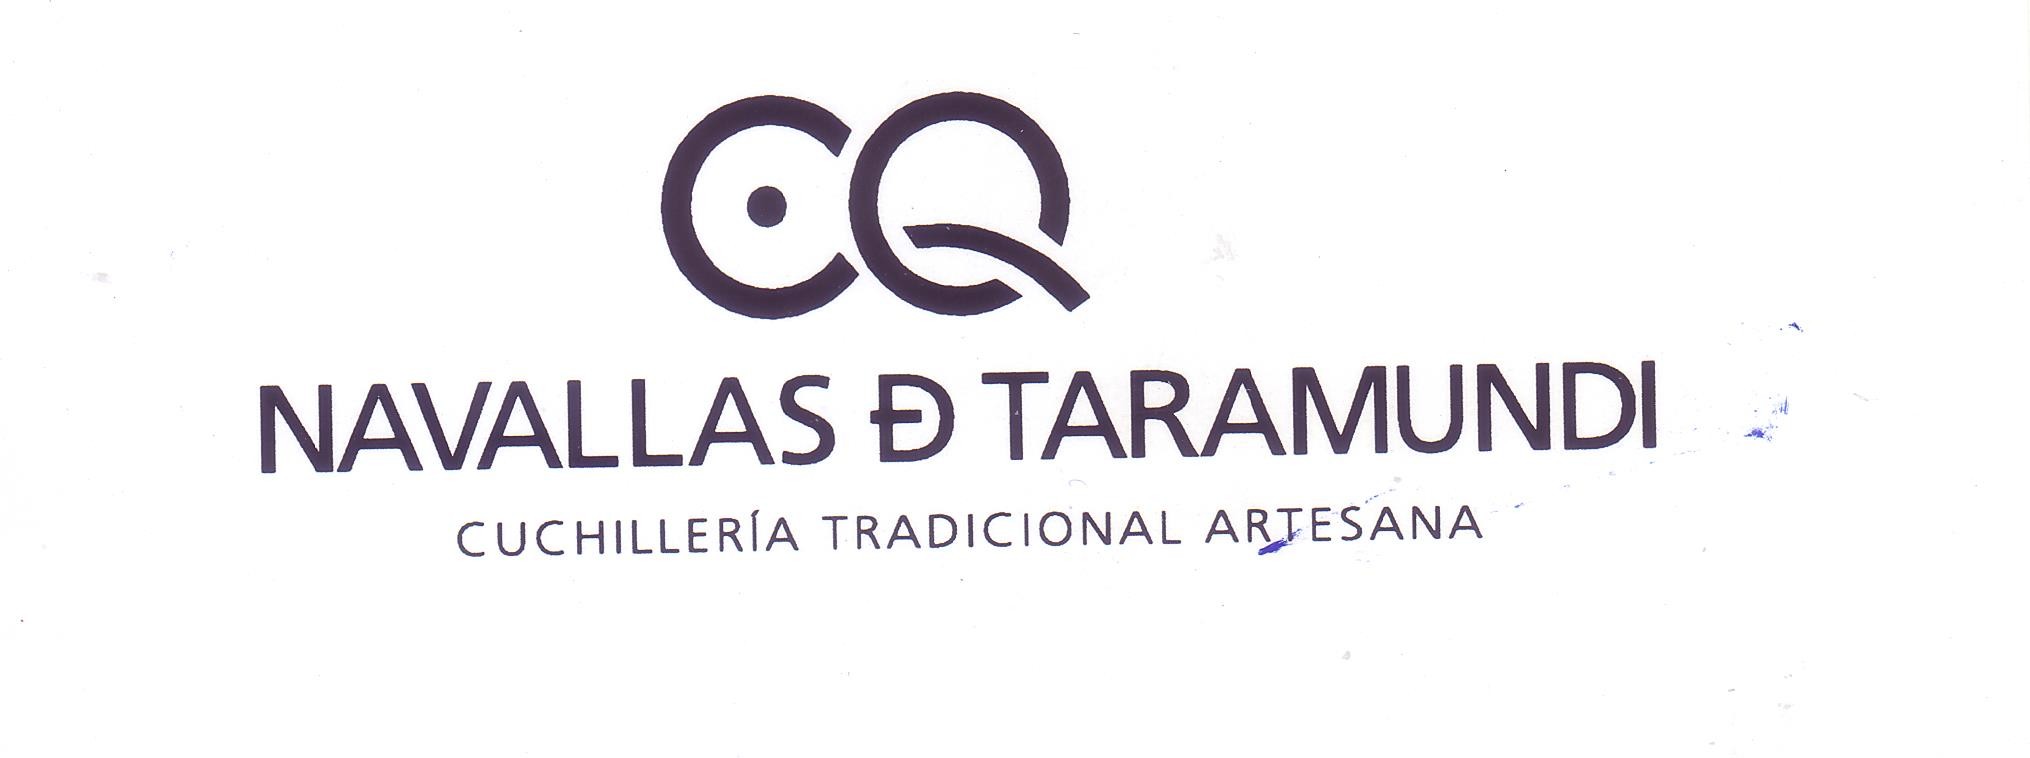  Taramundi CQ